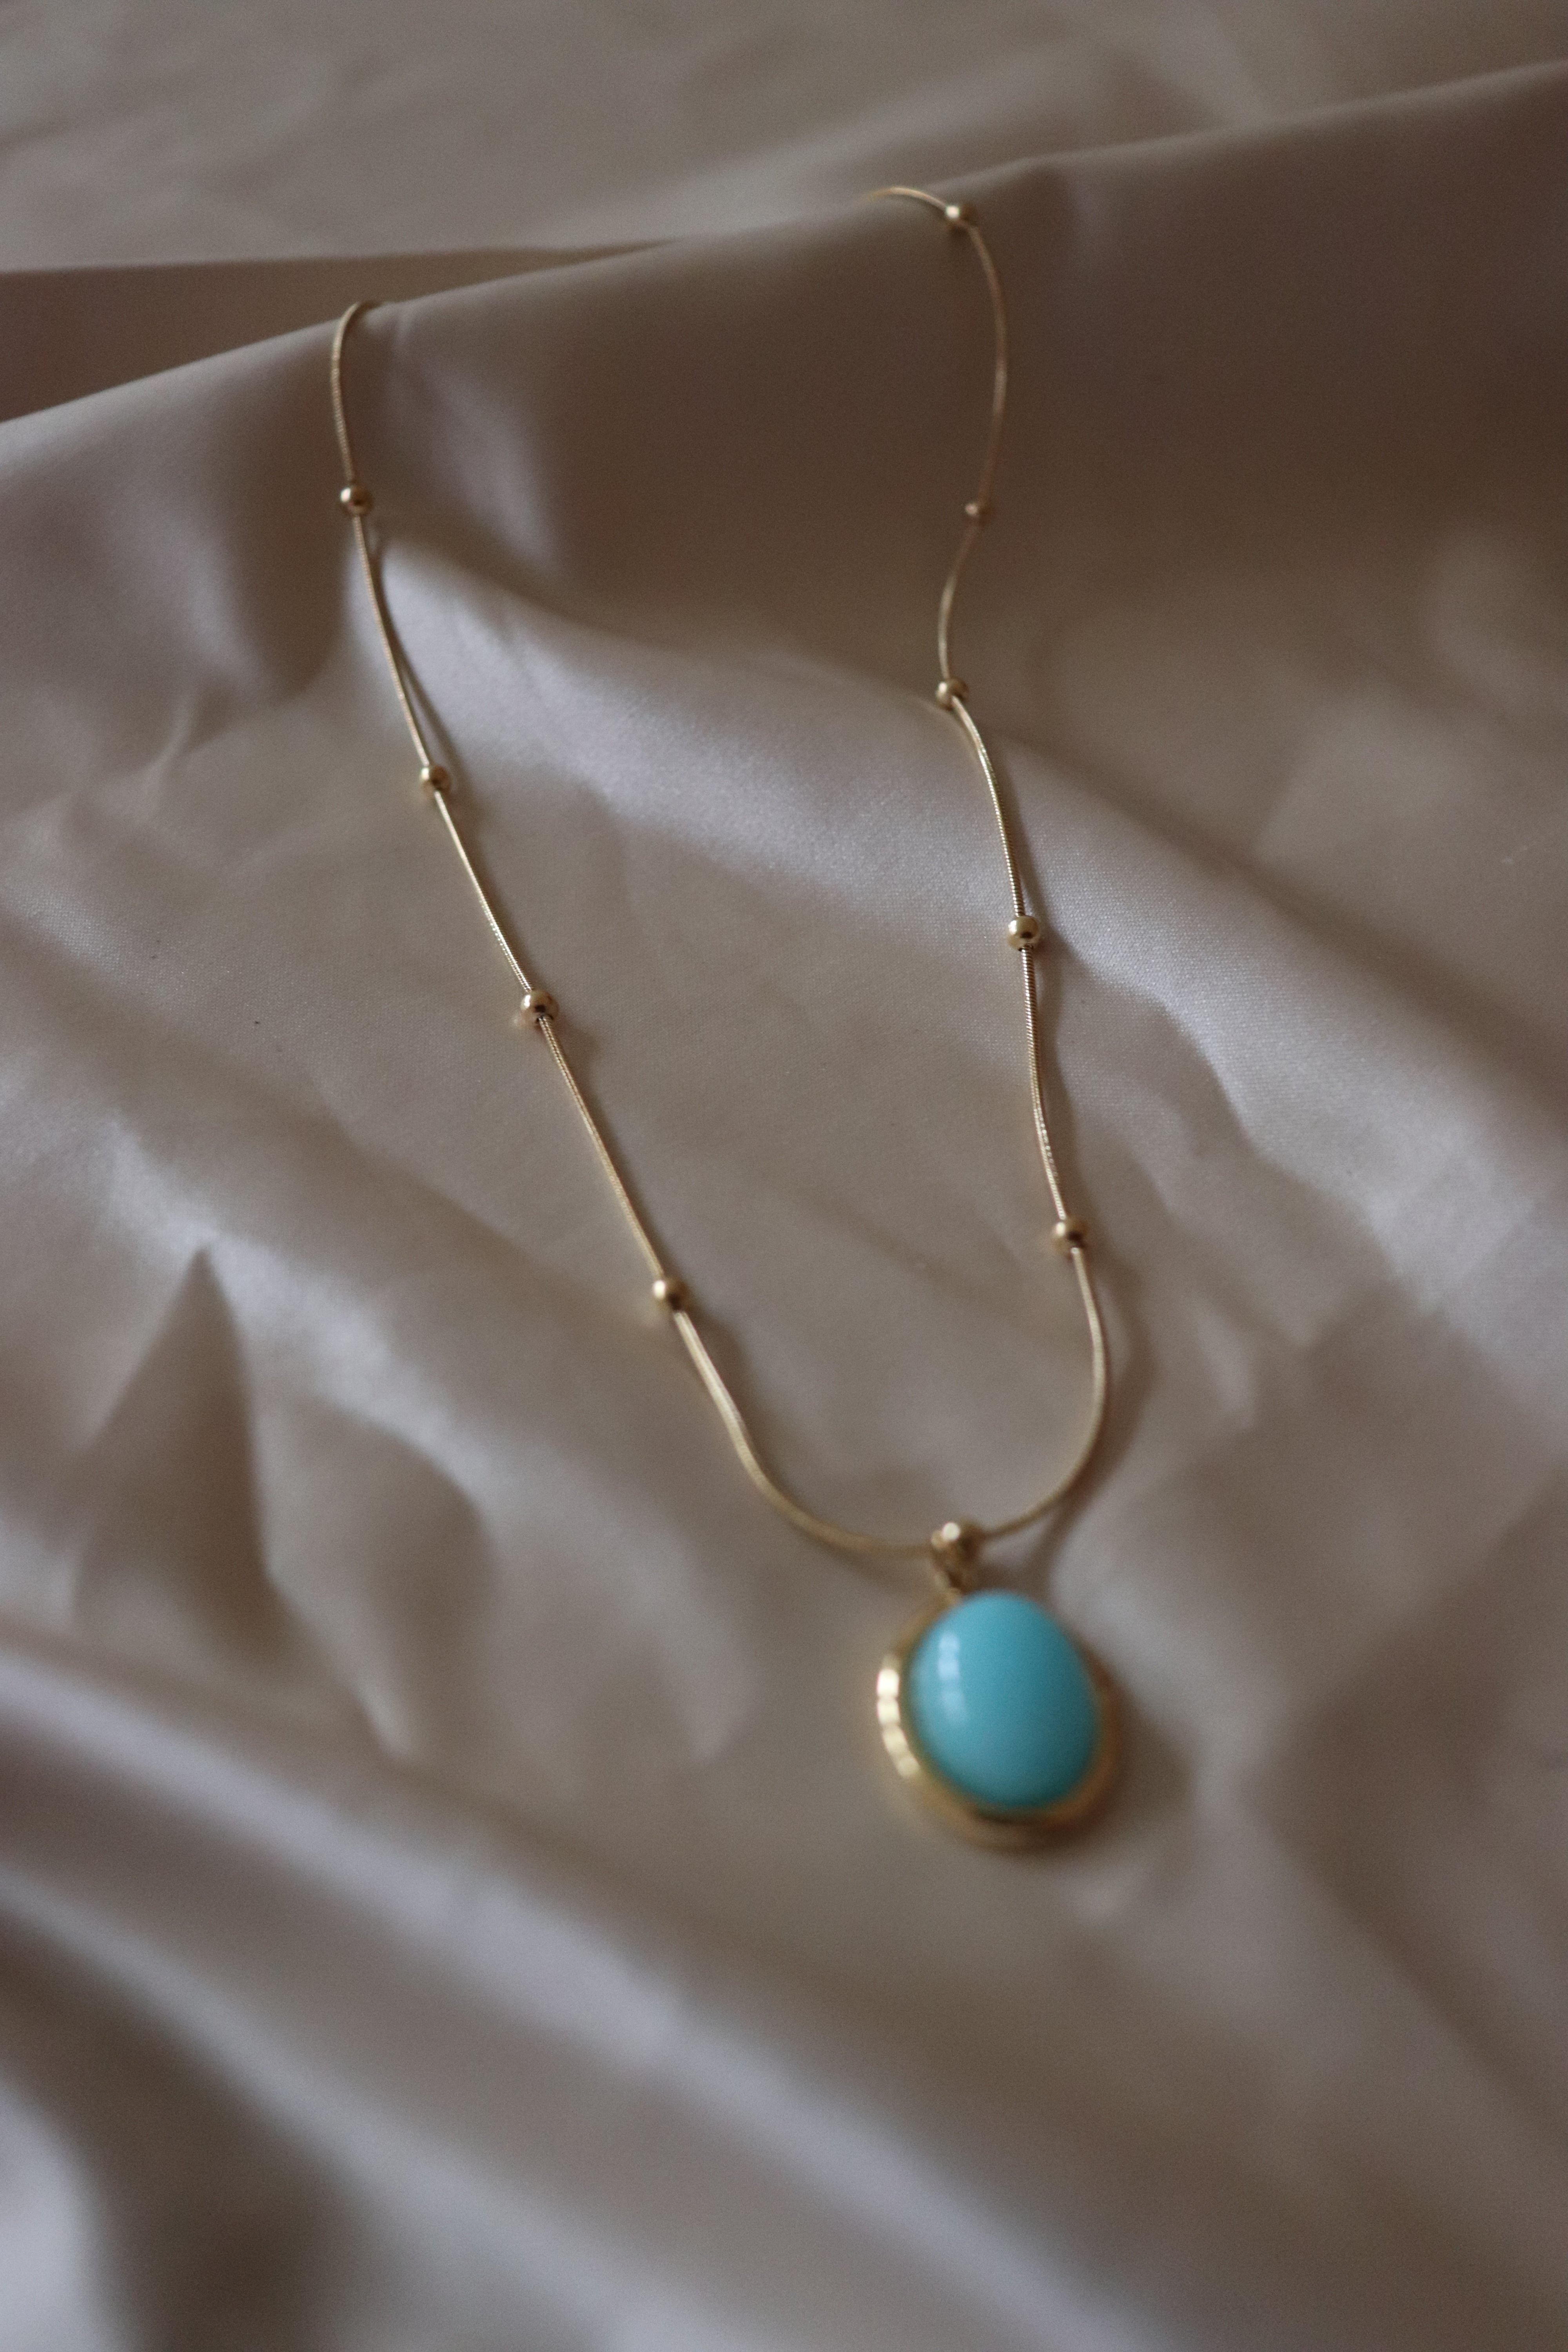 Blue stone necklace